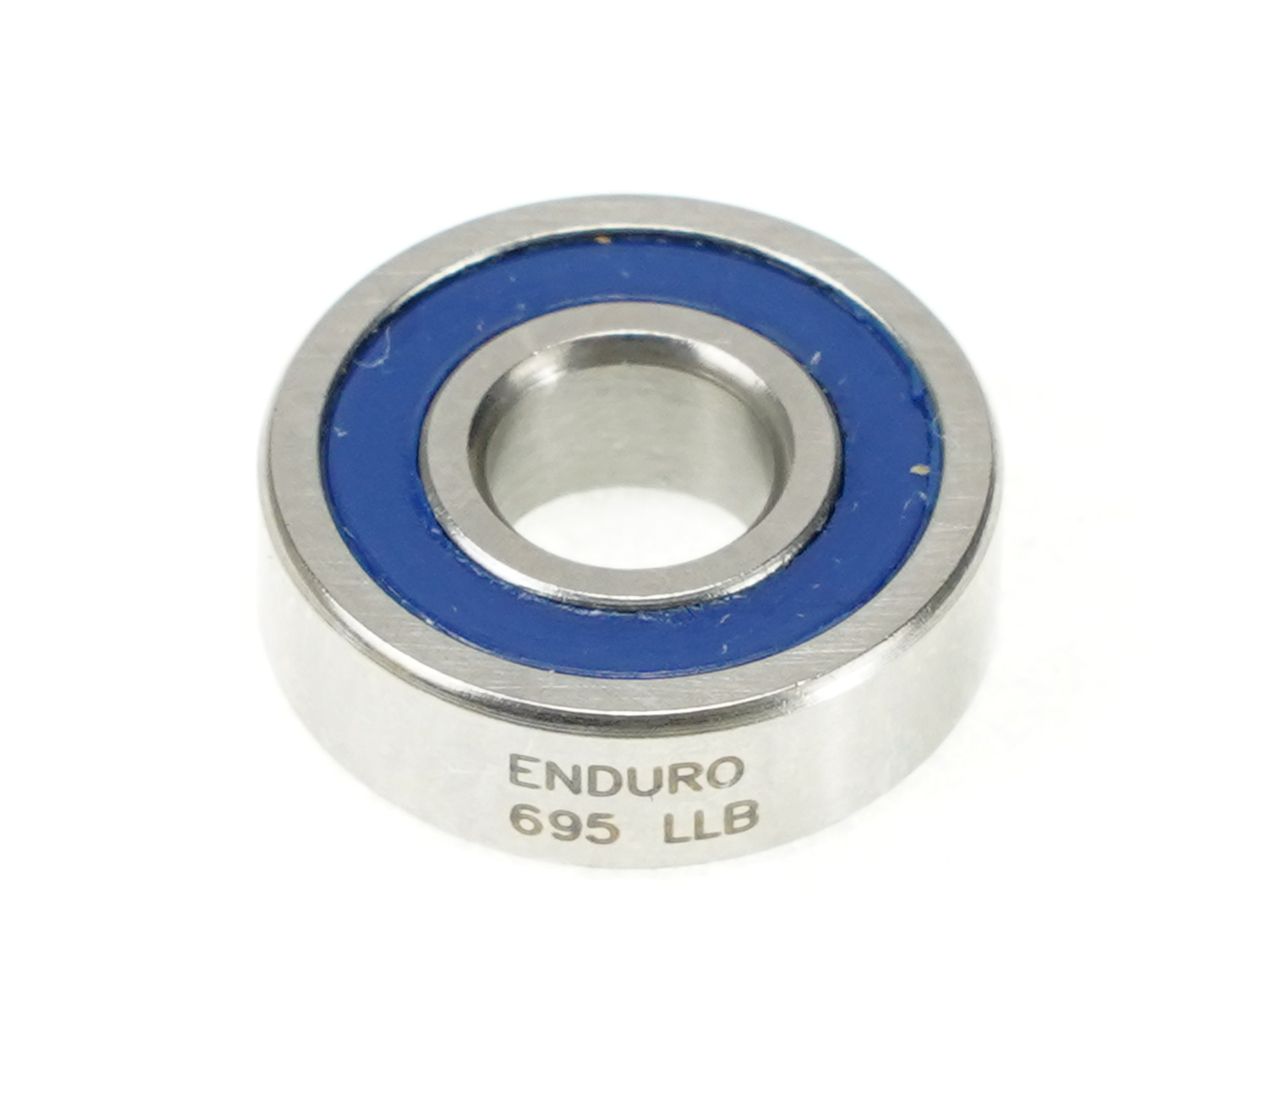 Enduro 695 LLB - ABEC-3 Radial Bearing (C3 Clearance) - 5mm x 13mm x 4mm